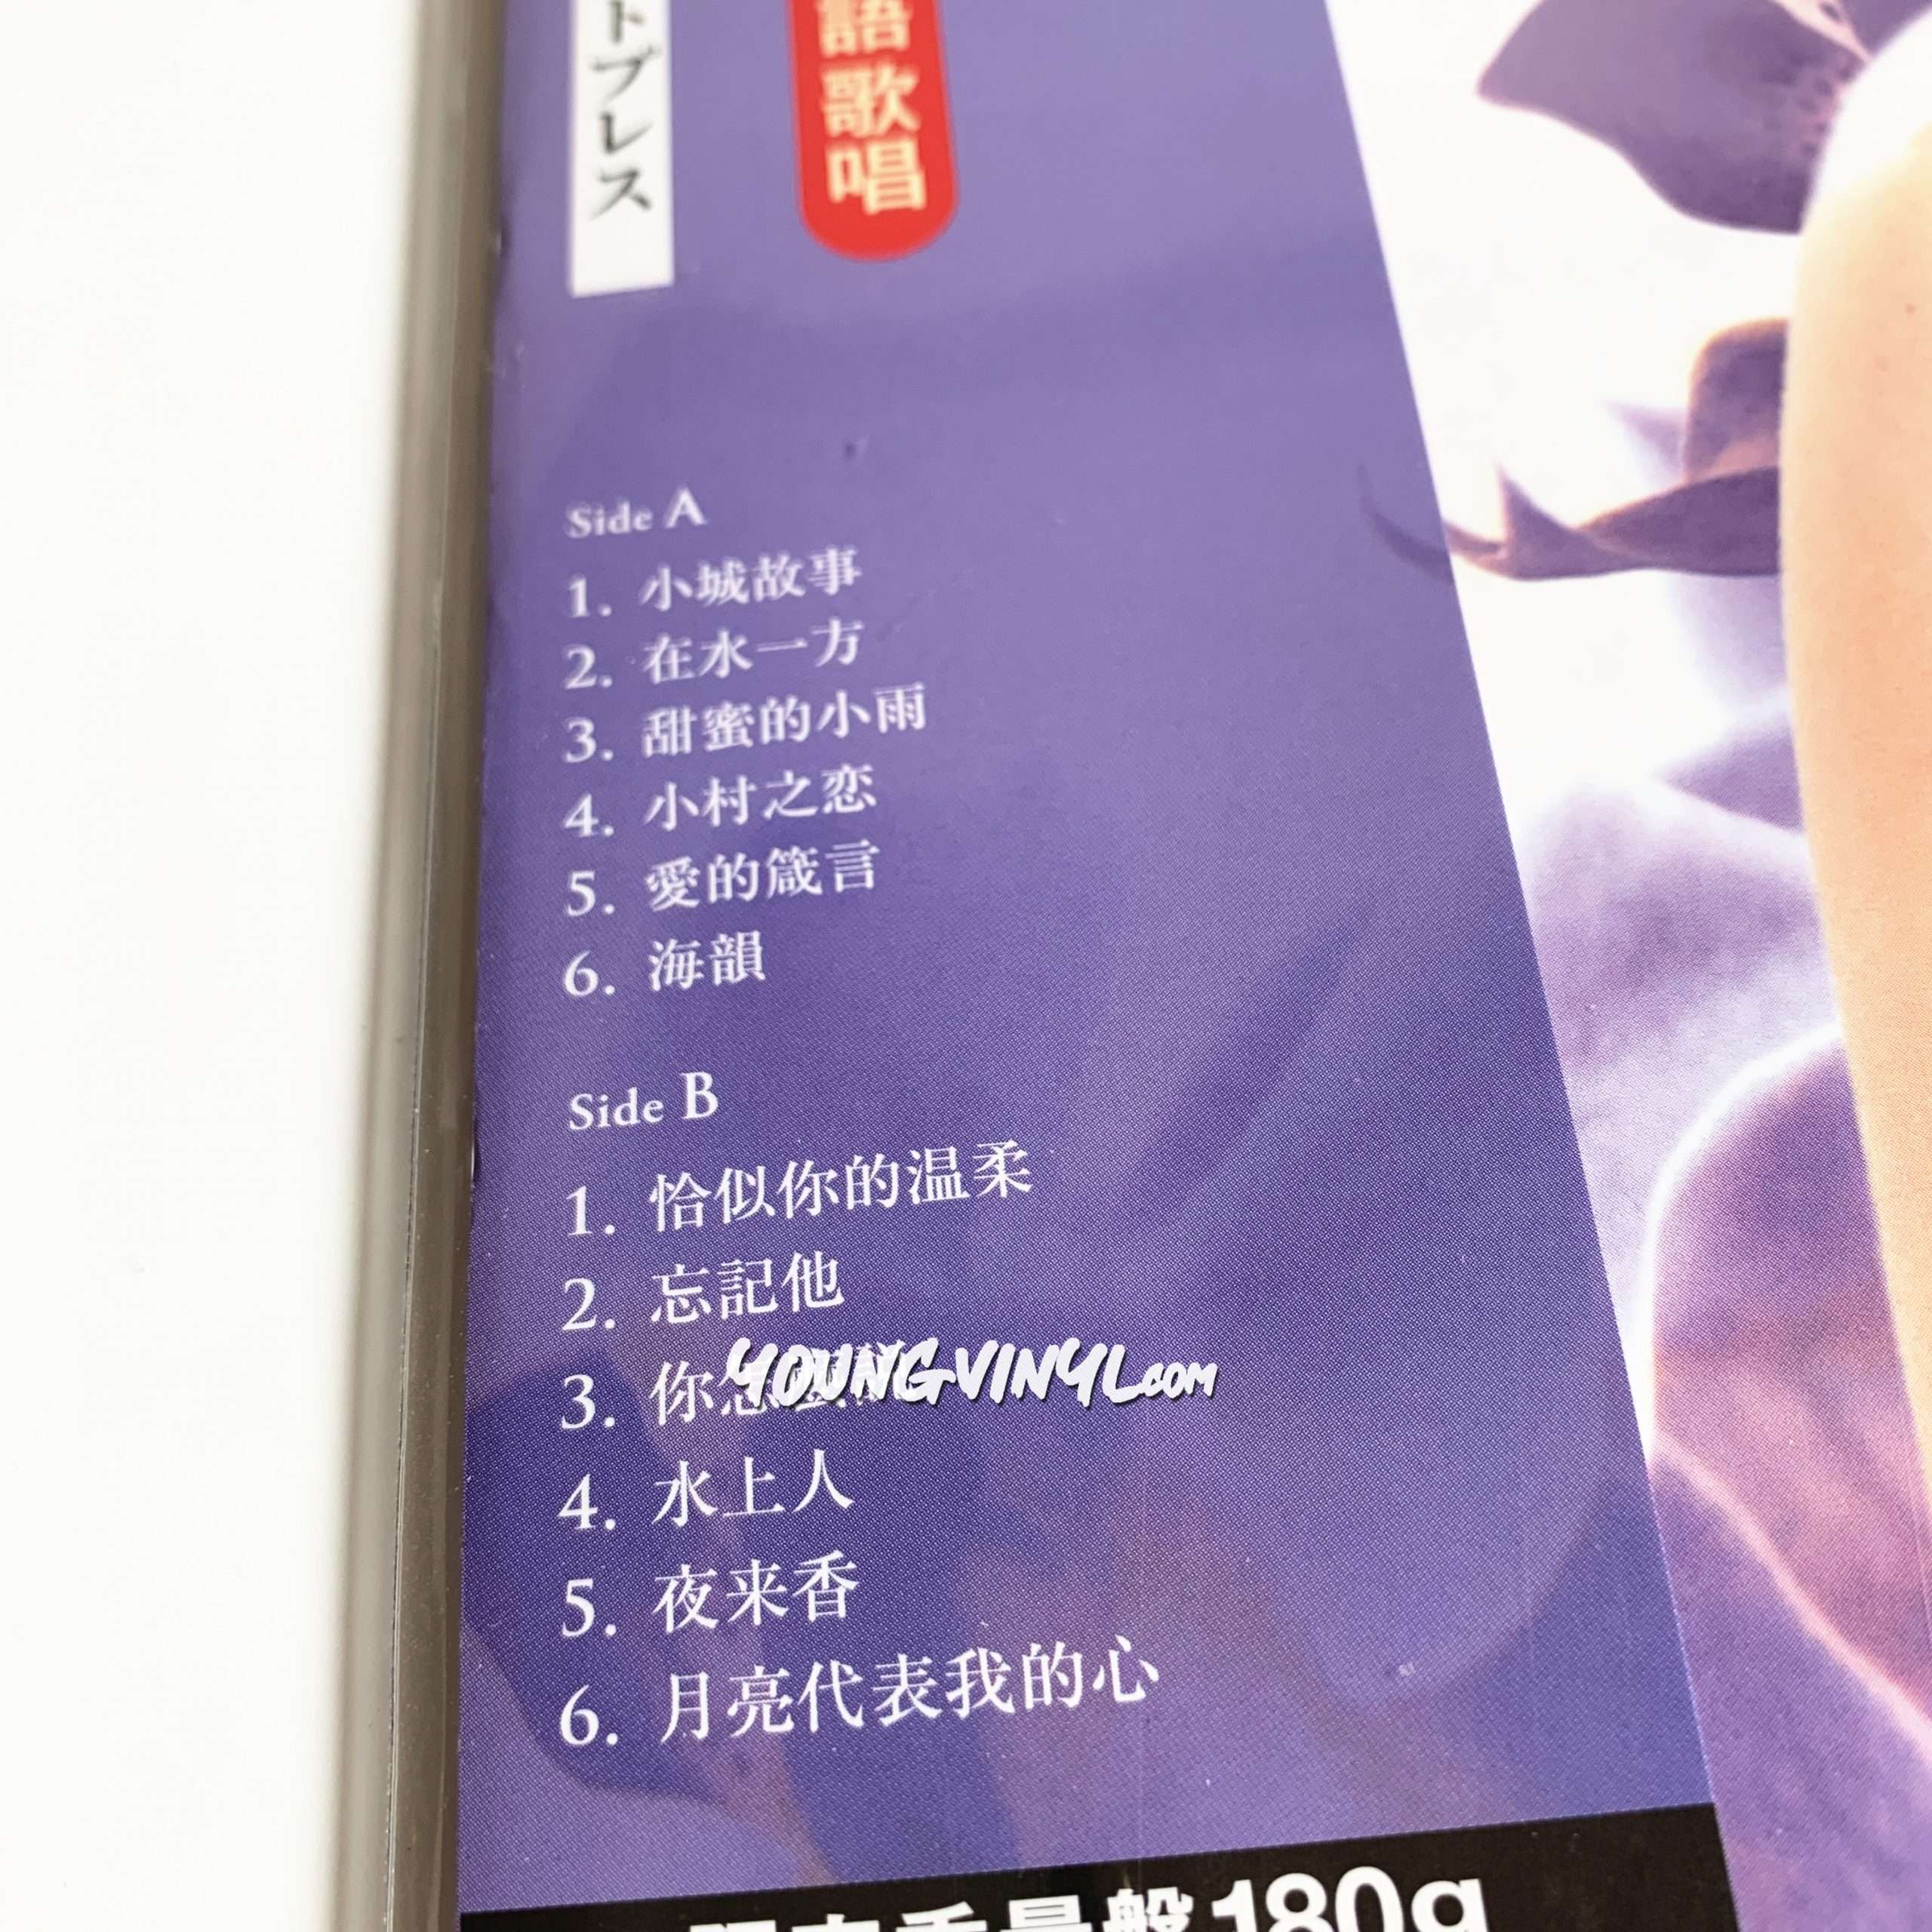 Teresa Teng 全曲中国語歌唱Vinyl 鄧麗君テレサ・テンStereo Sound 黑